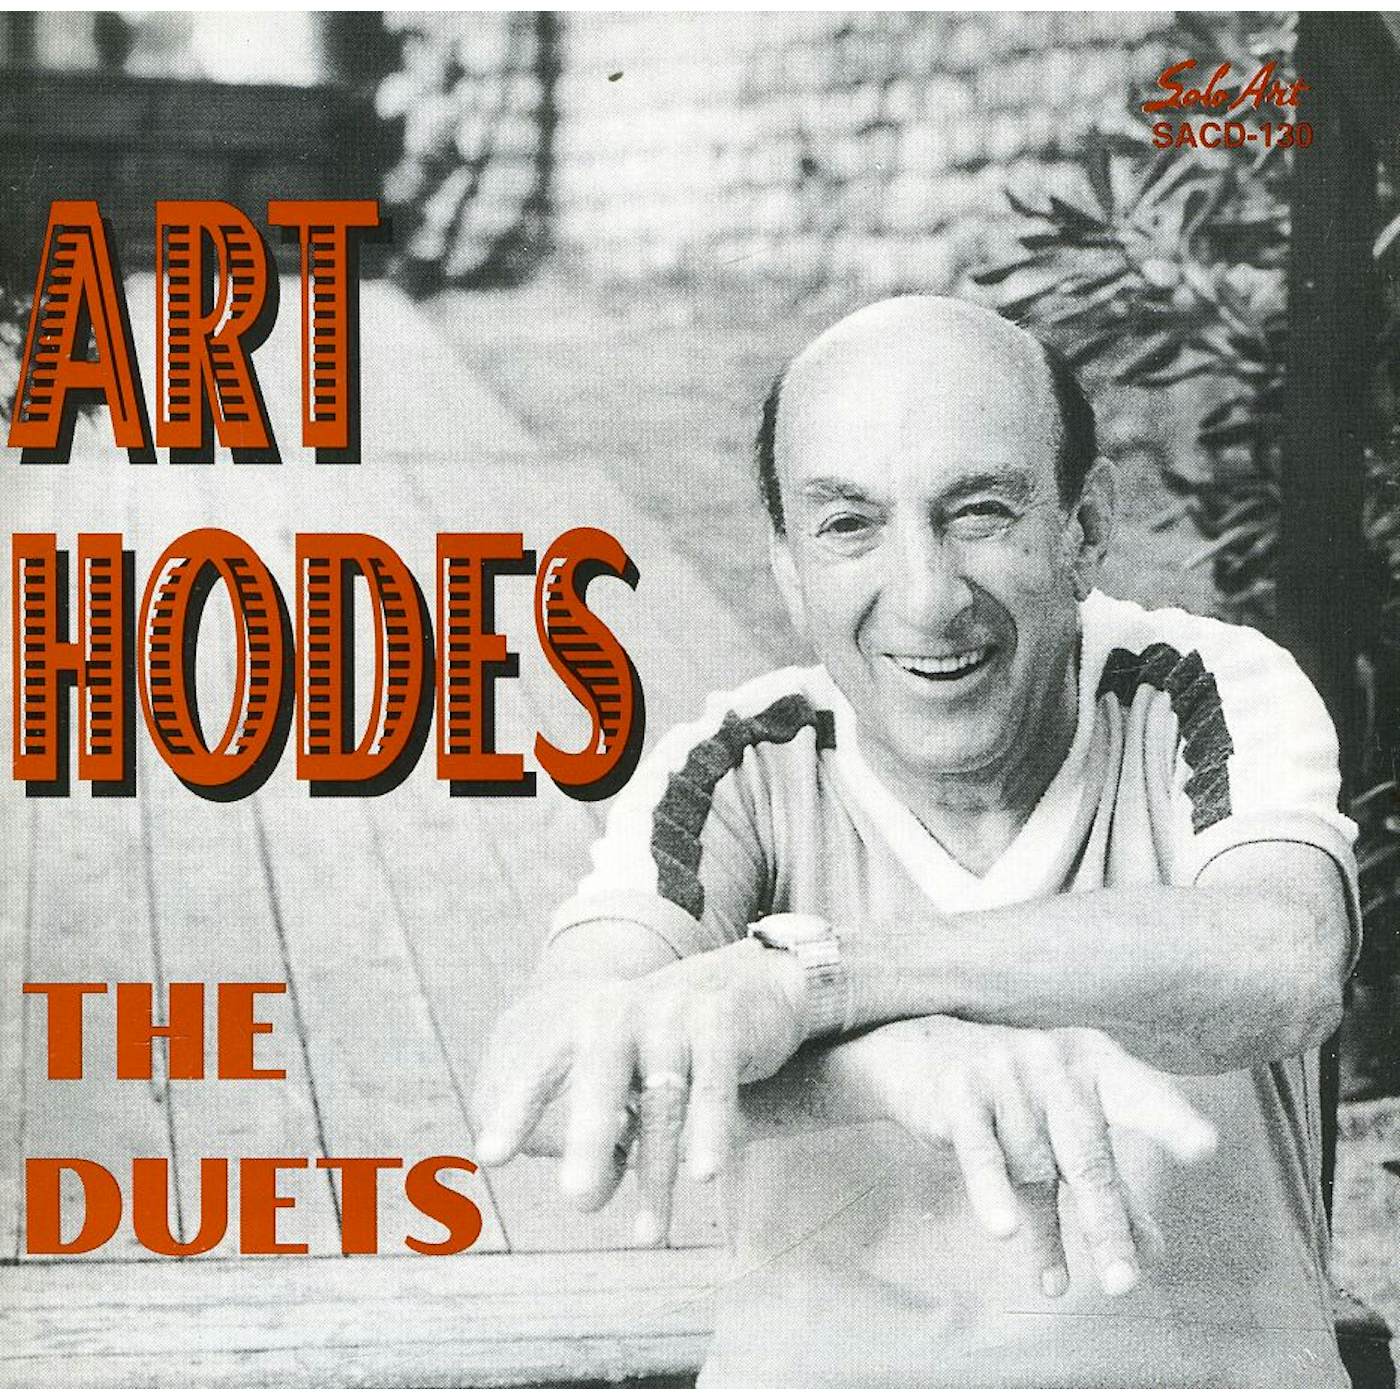 Art Hodes DUETS CD